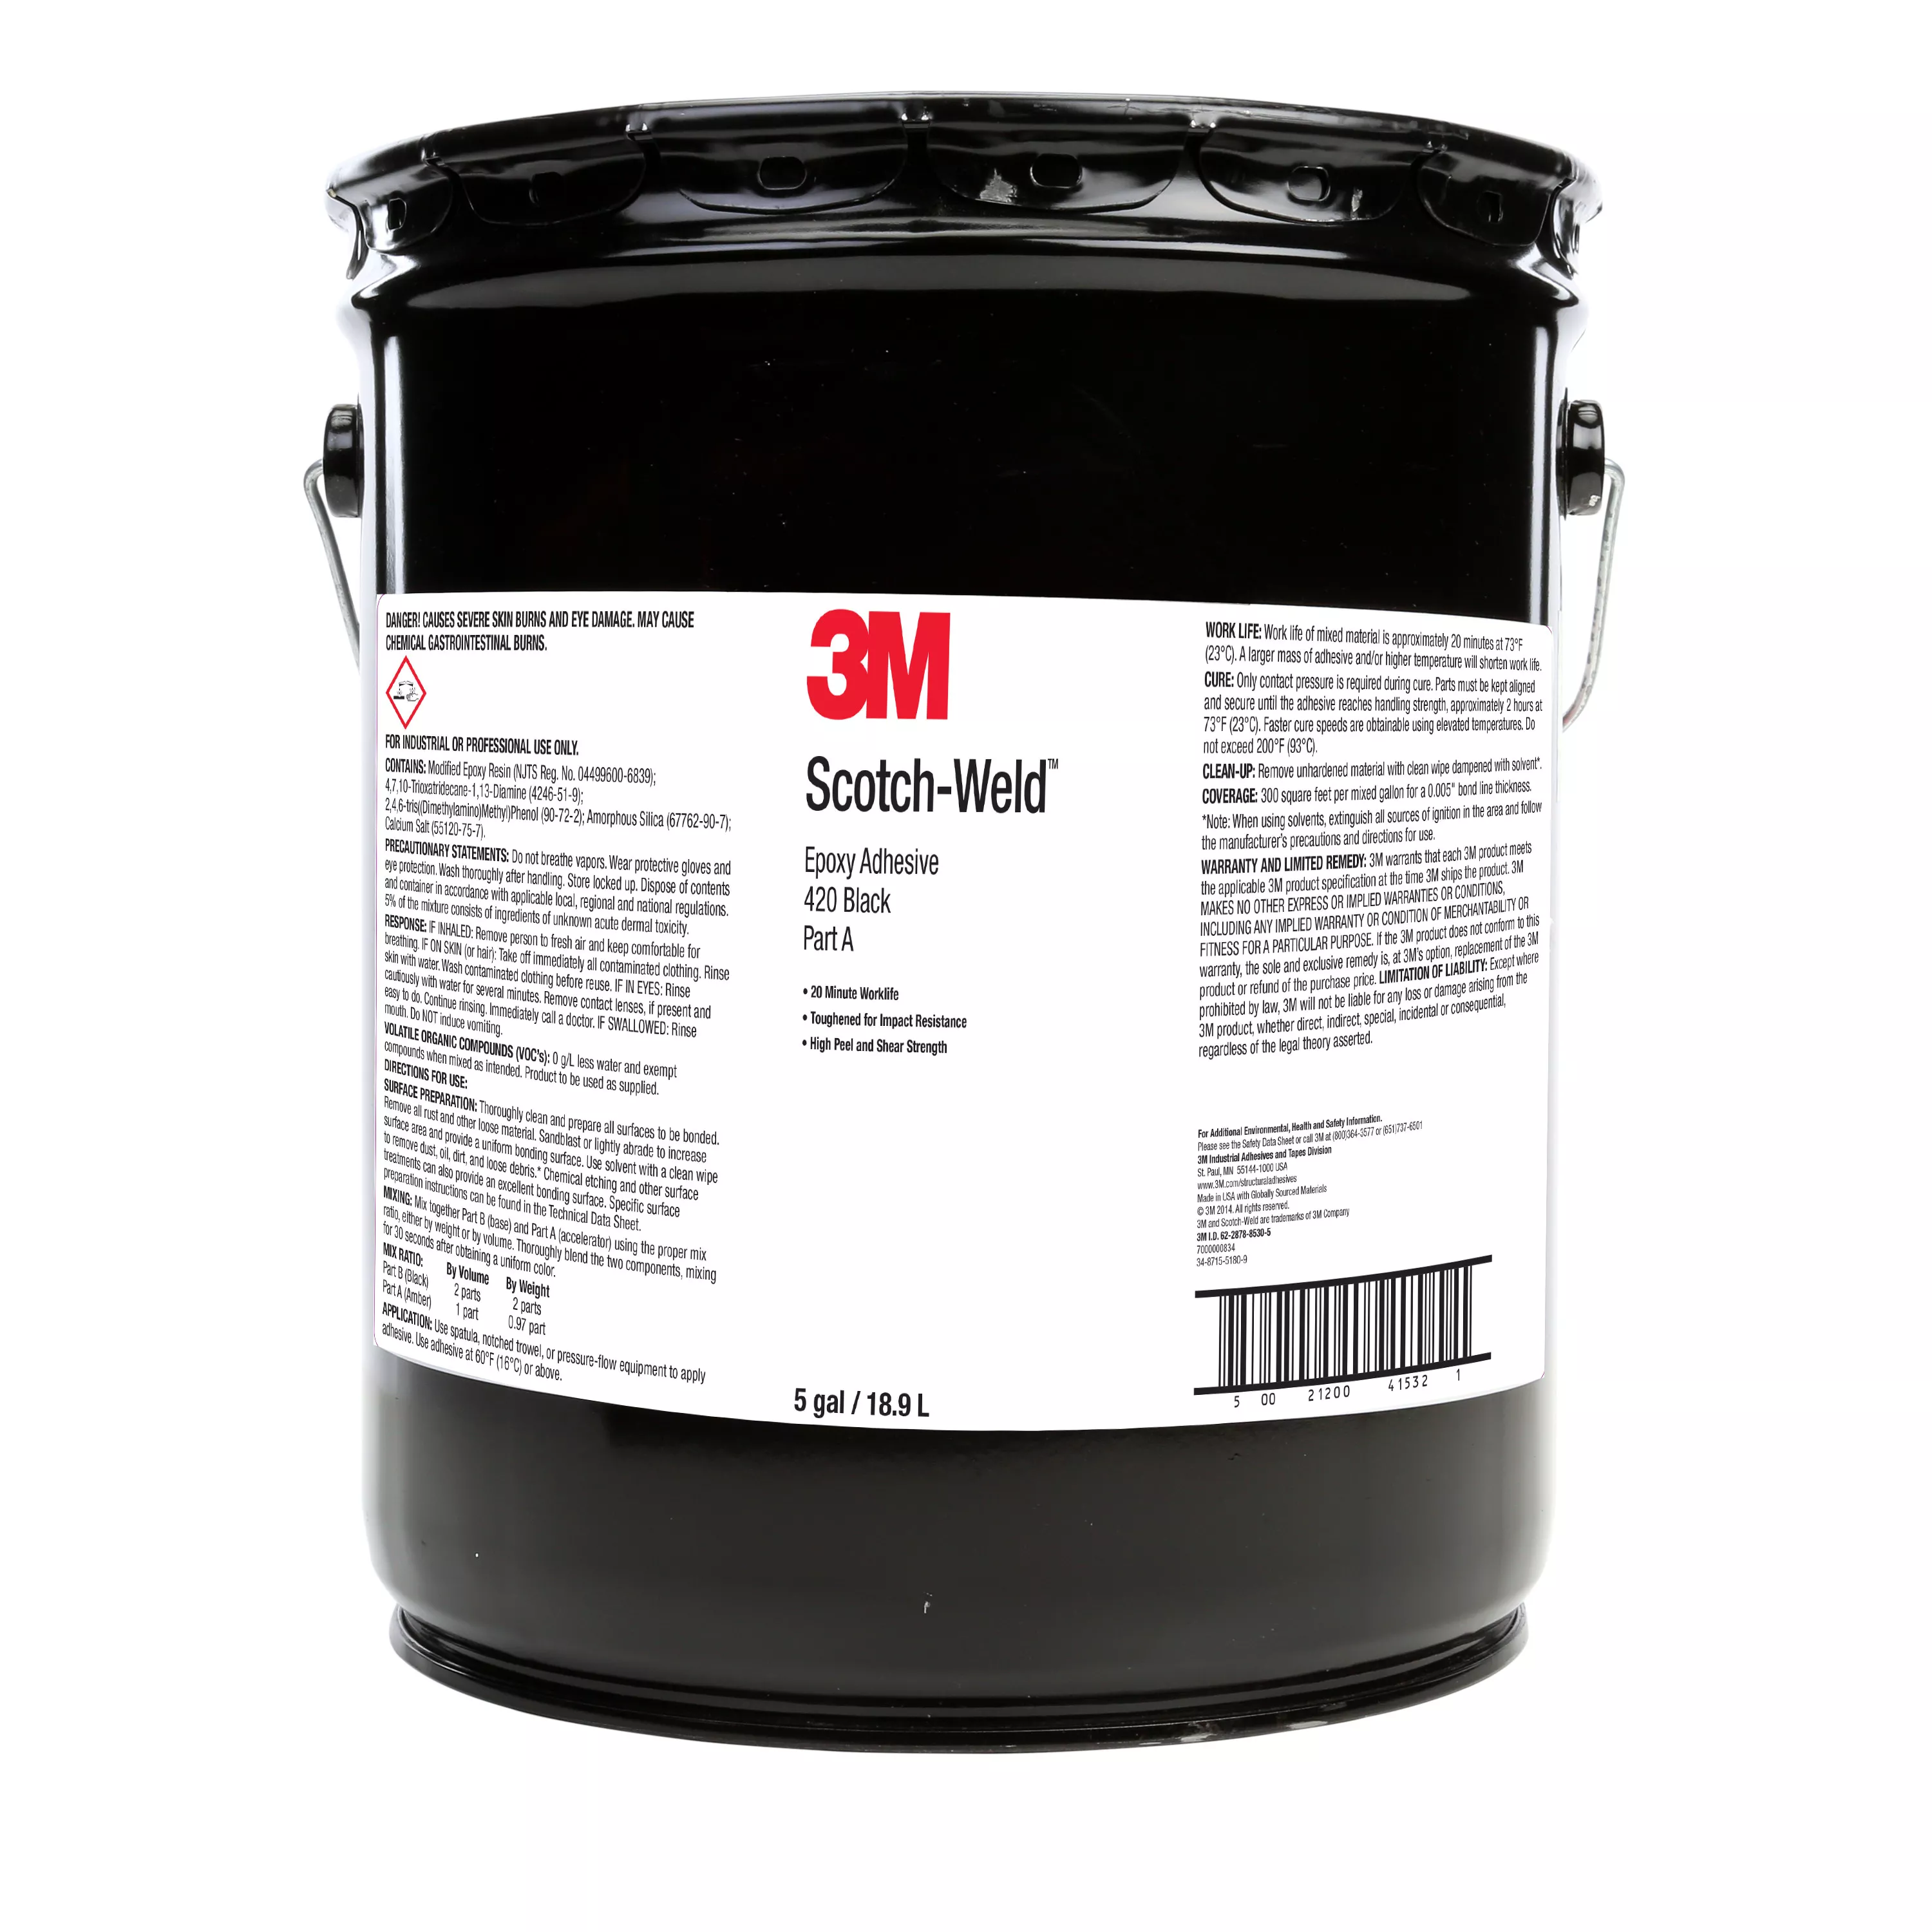 3M™ Scotch-Weld™ Epoxy Adhesive 420, Black, Part A, 5 Gallon (Pail),
Drum